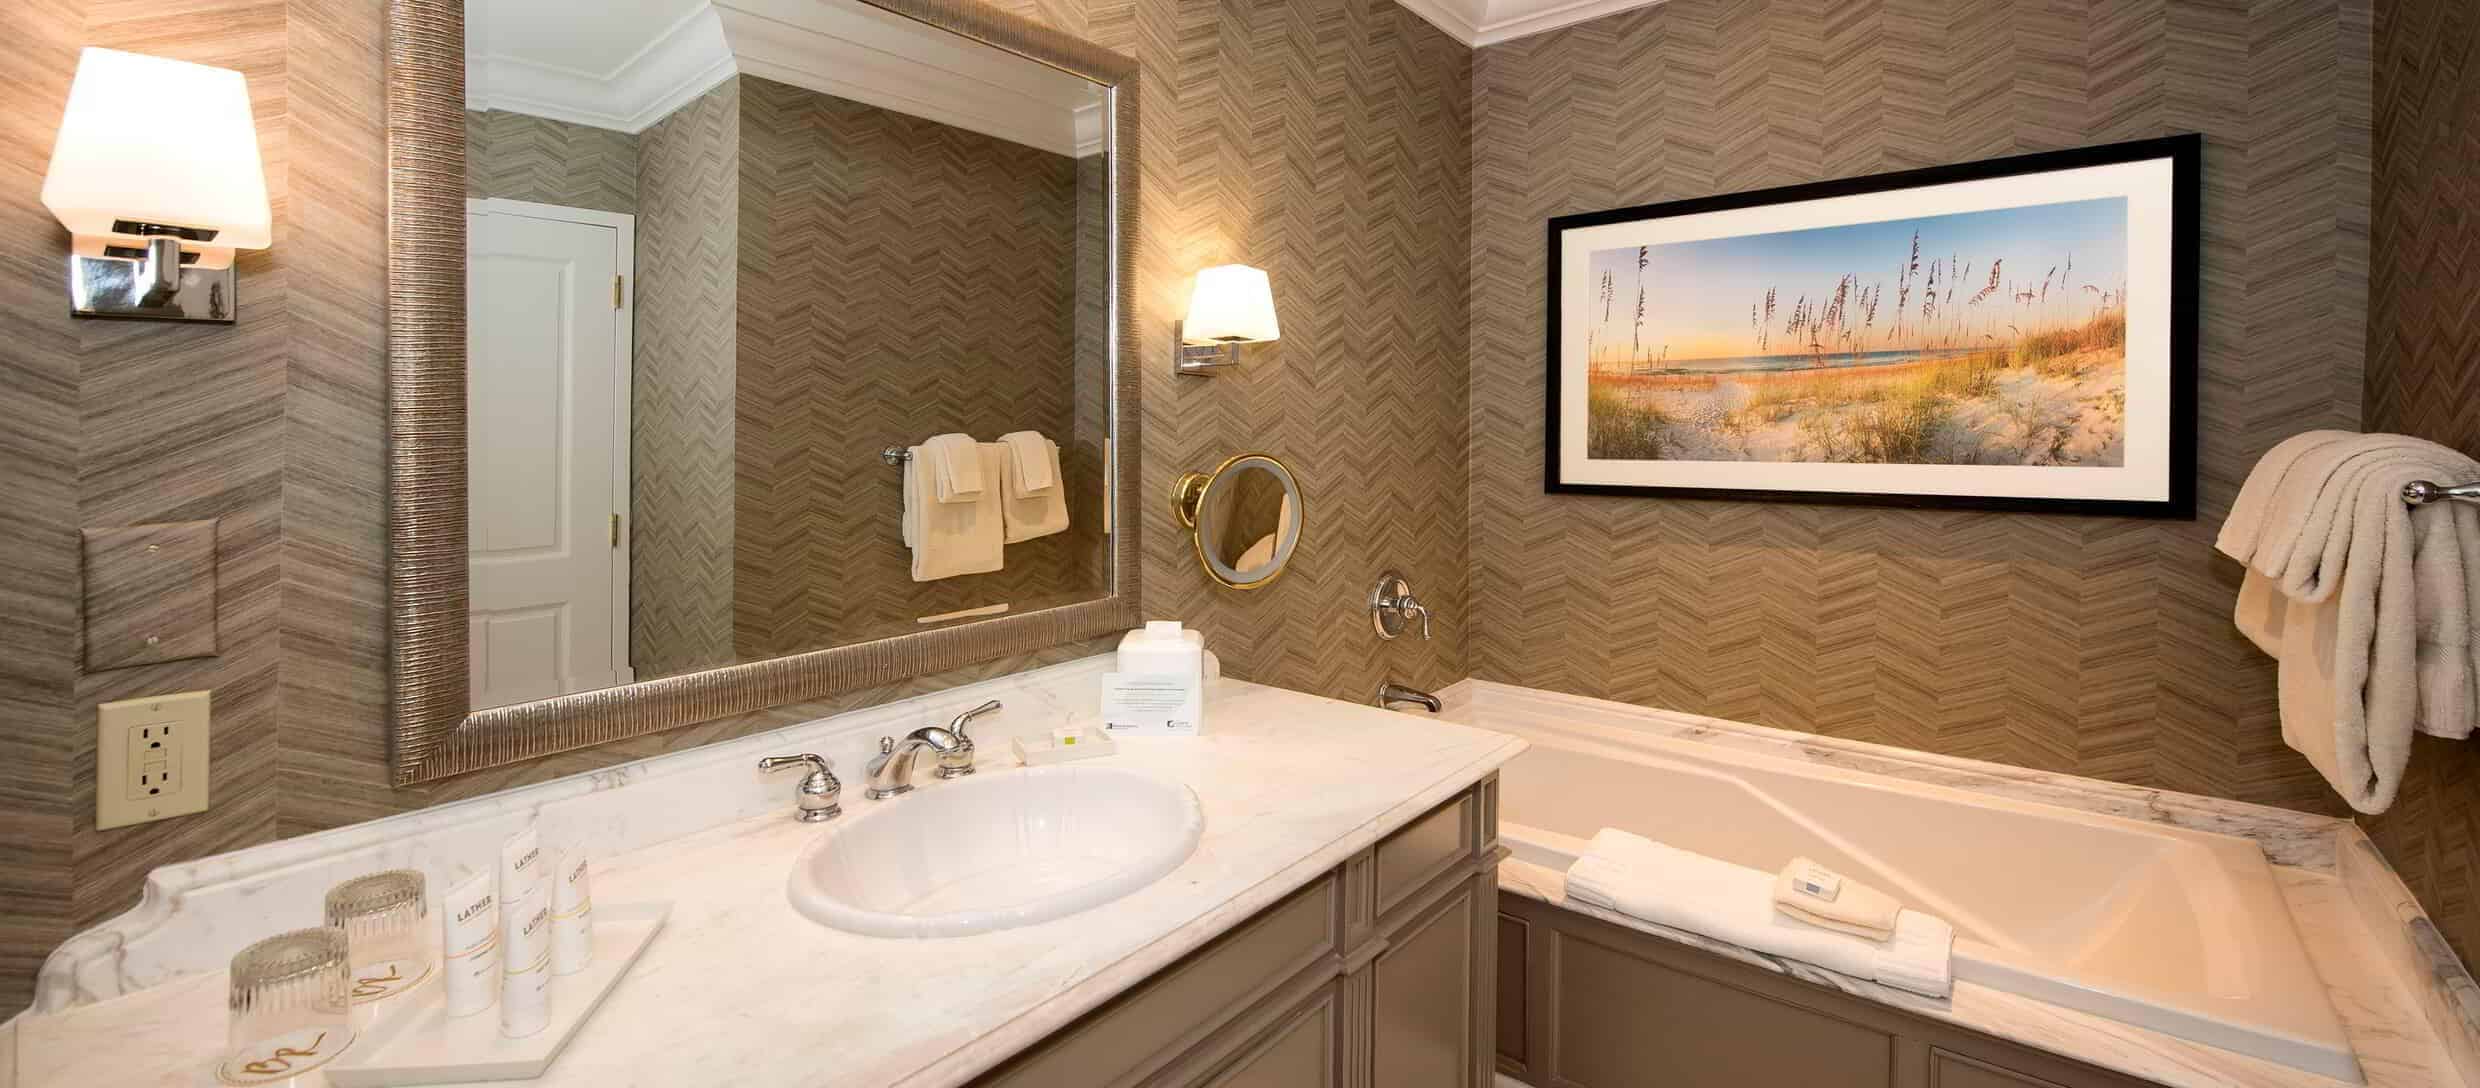 beau-rivage-hotel-jasmine-suite-bathroom.jpg.image.2480.1088.high